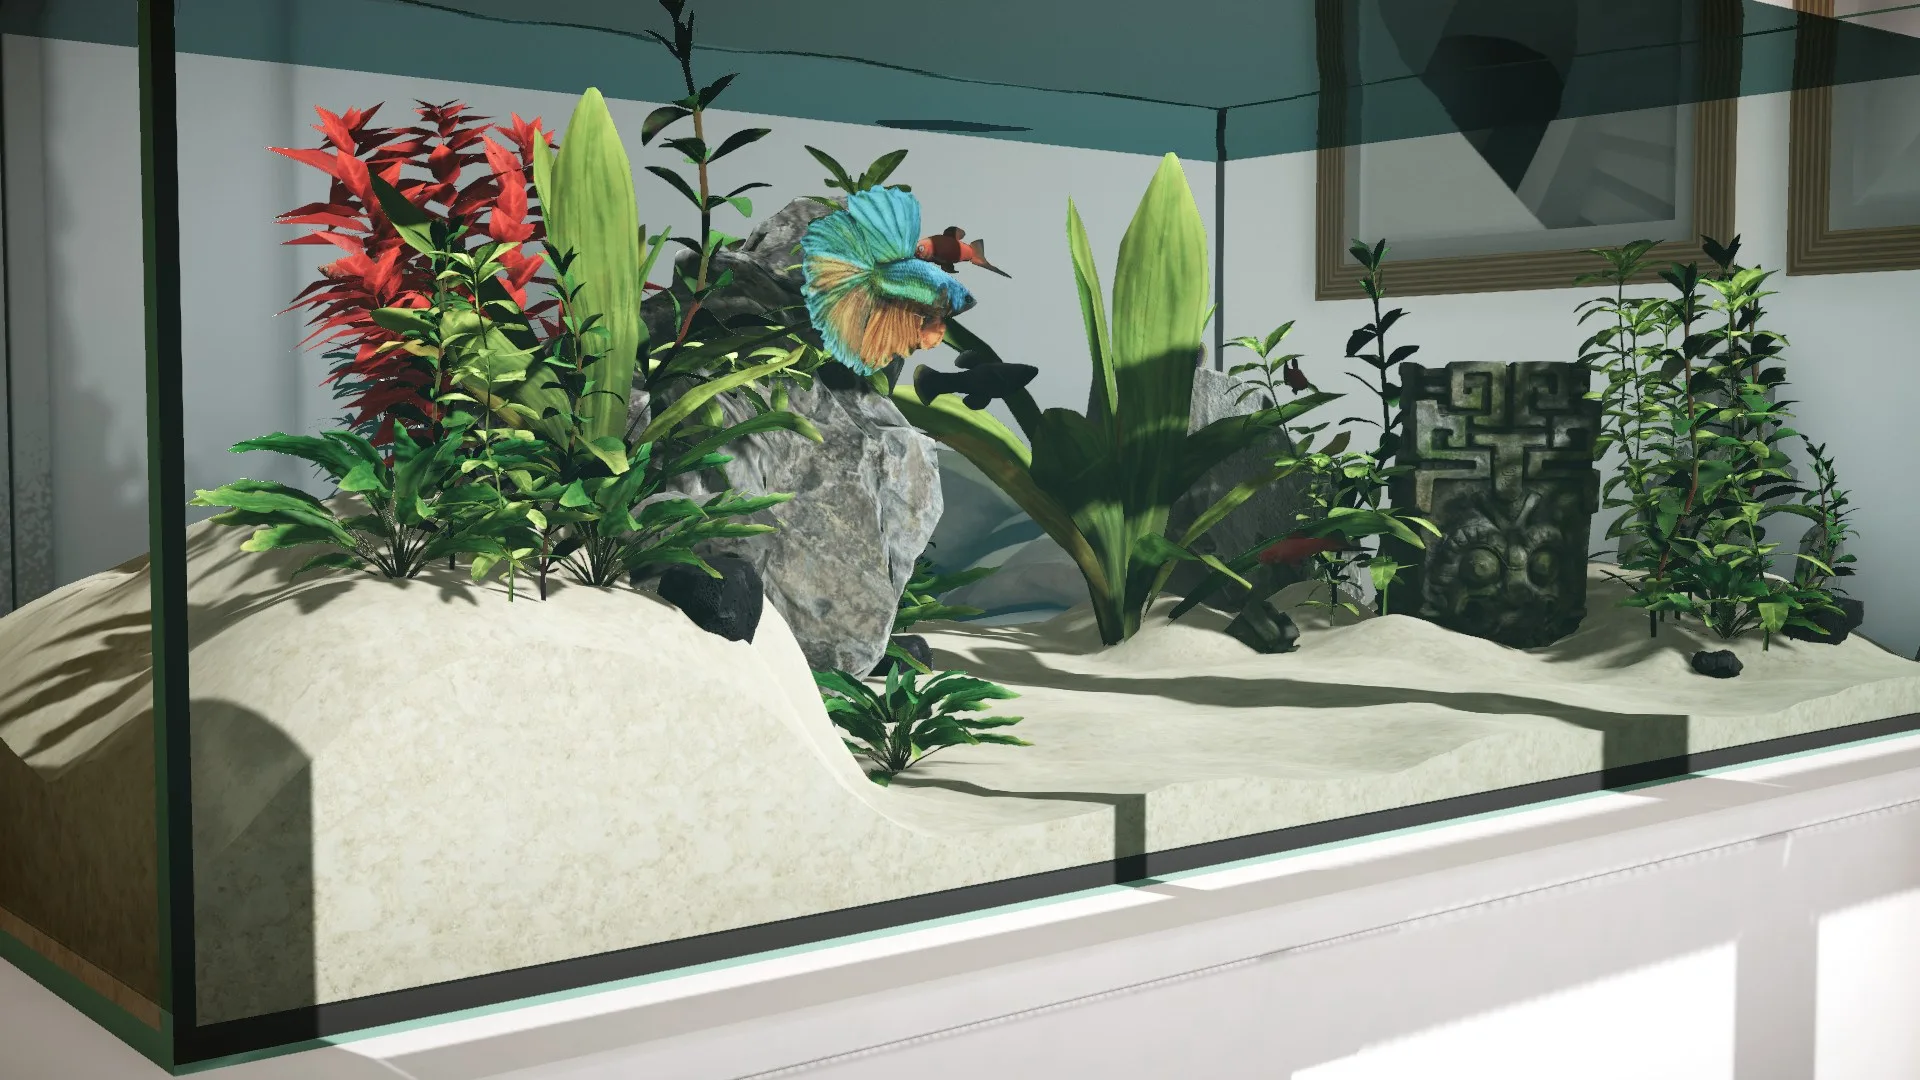 Aquarium Builder - aquarium setup image containing a blue tropical fish.